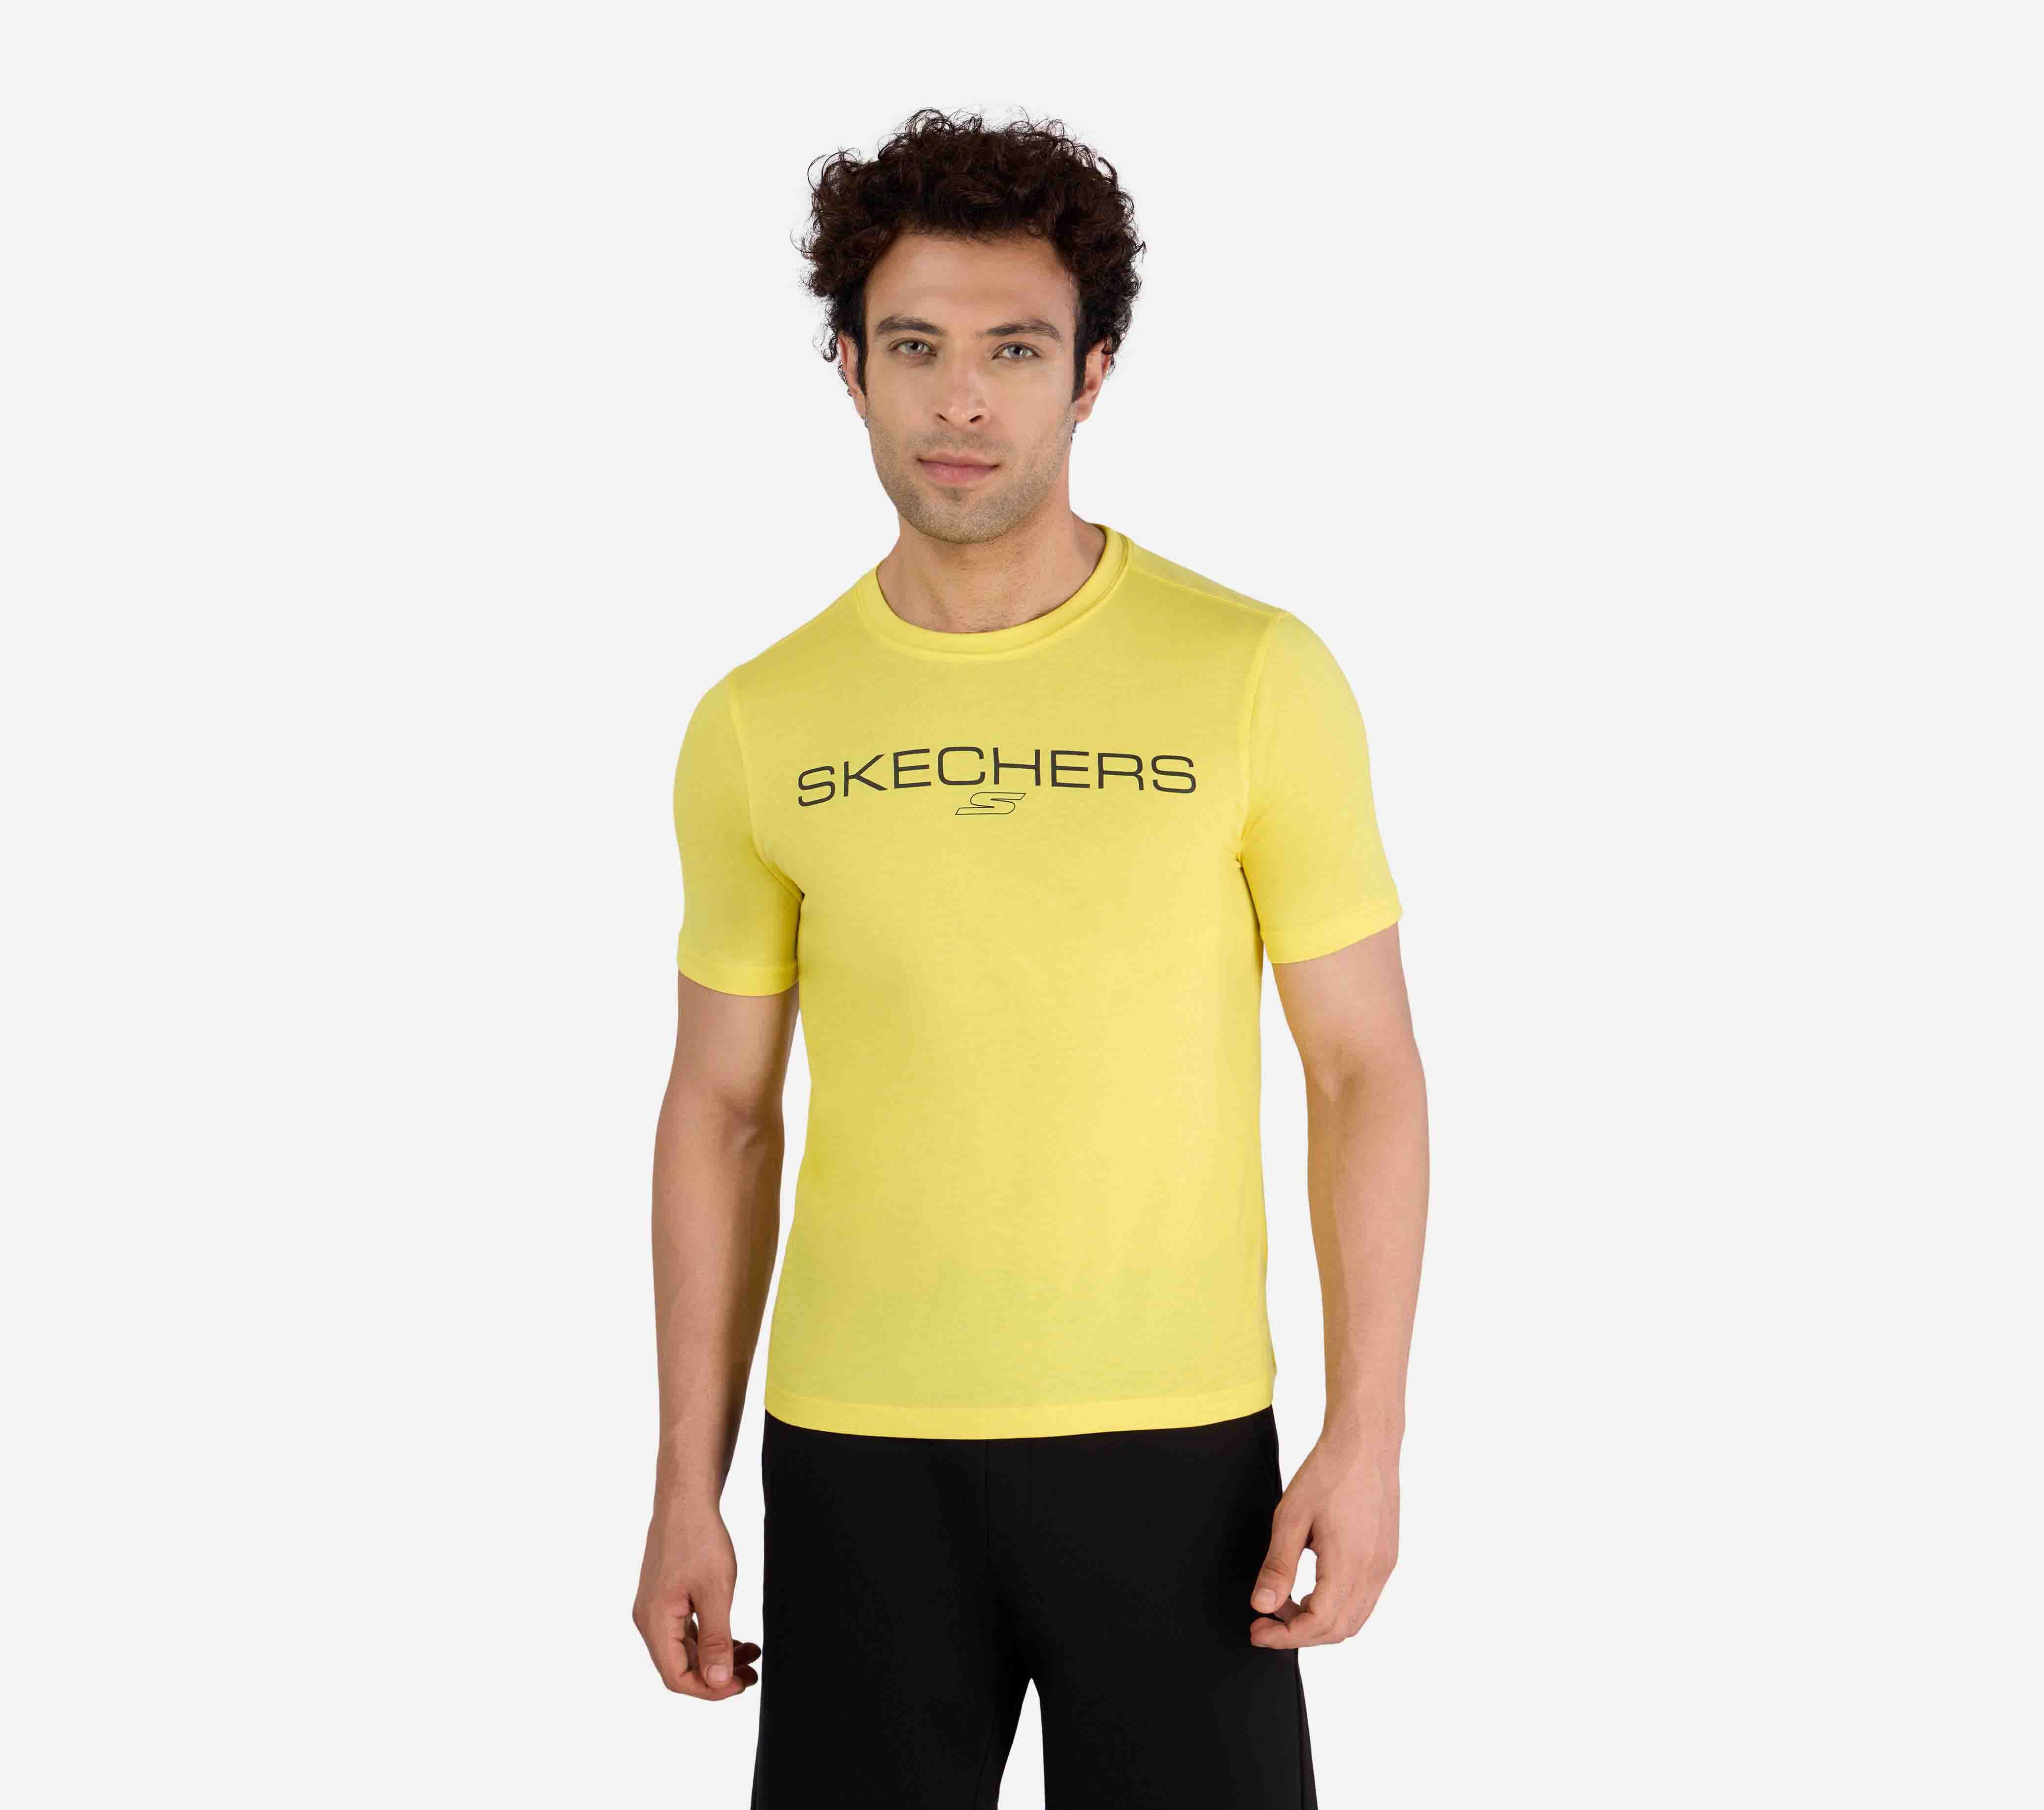 Dream Crusher T-shirt sold by Peggi Persimmon, SKU 2073418